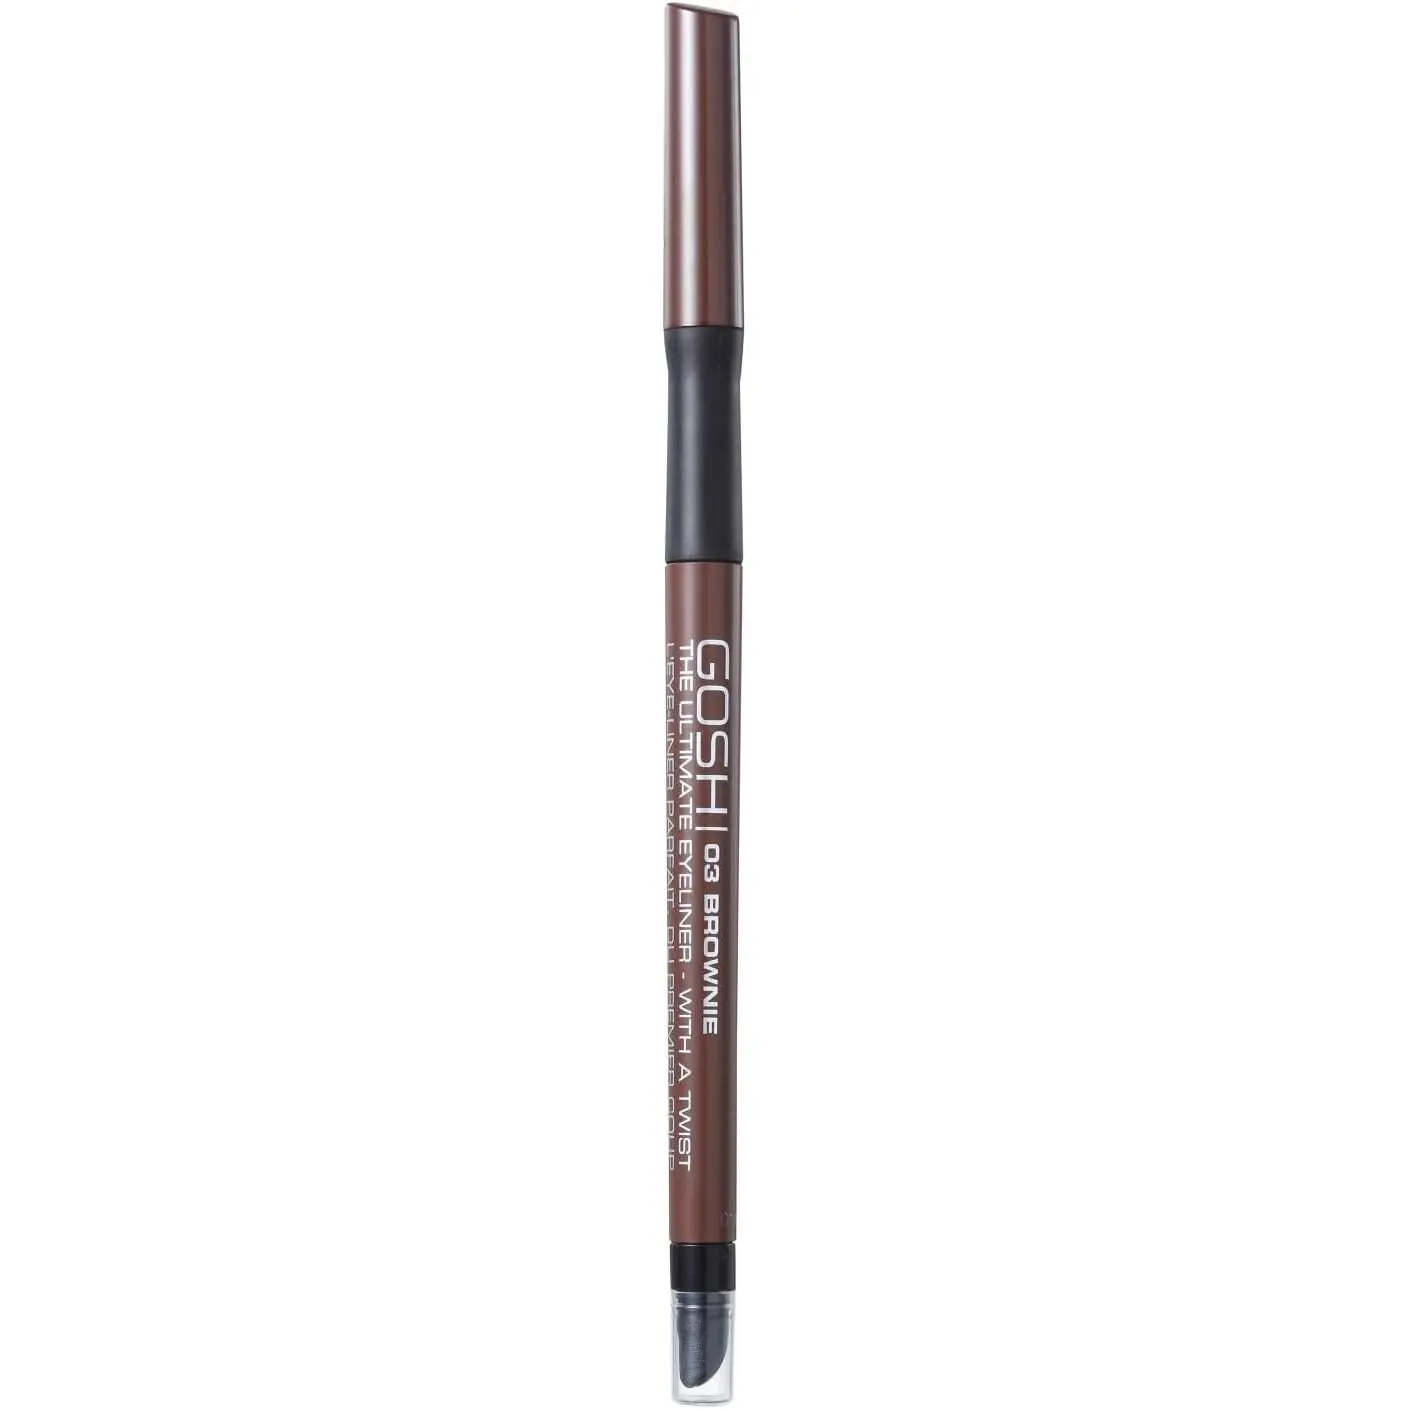 Олівець для очей Gosh Ultimate Eyeliner With A Twist відтінок 03 (Brownie) 0.4 г - фото 3